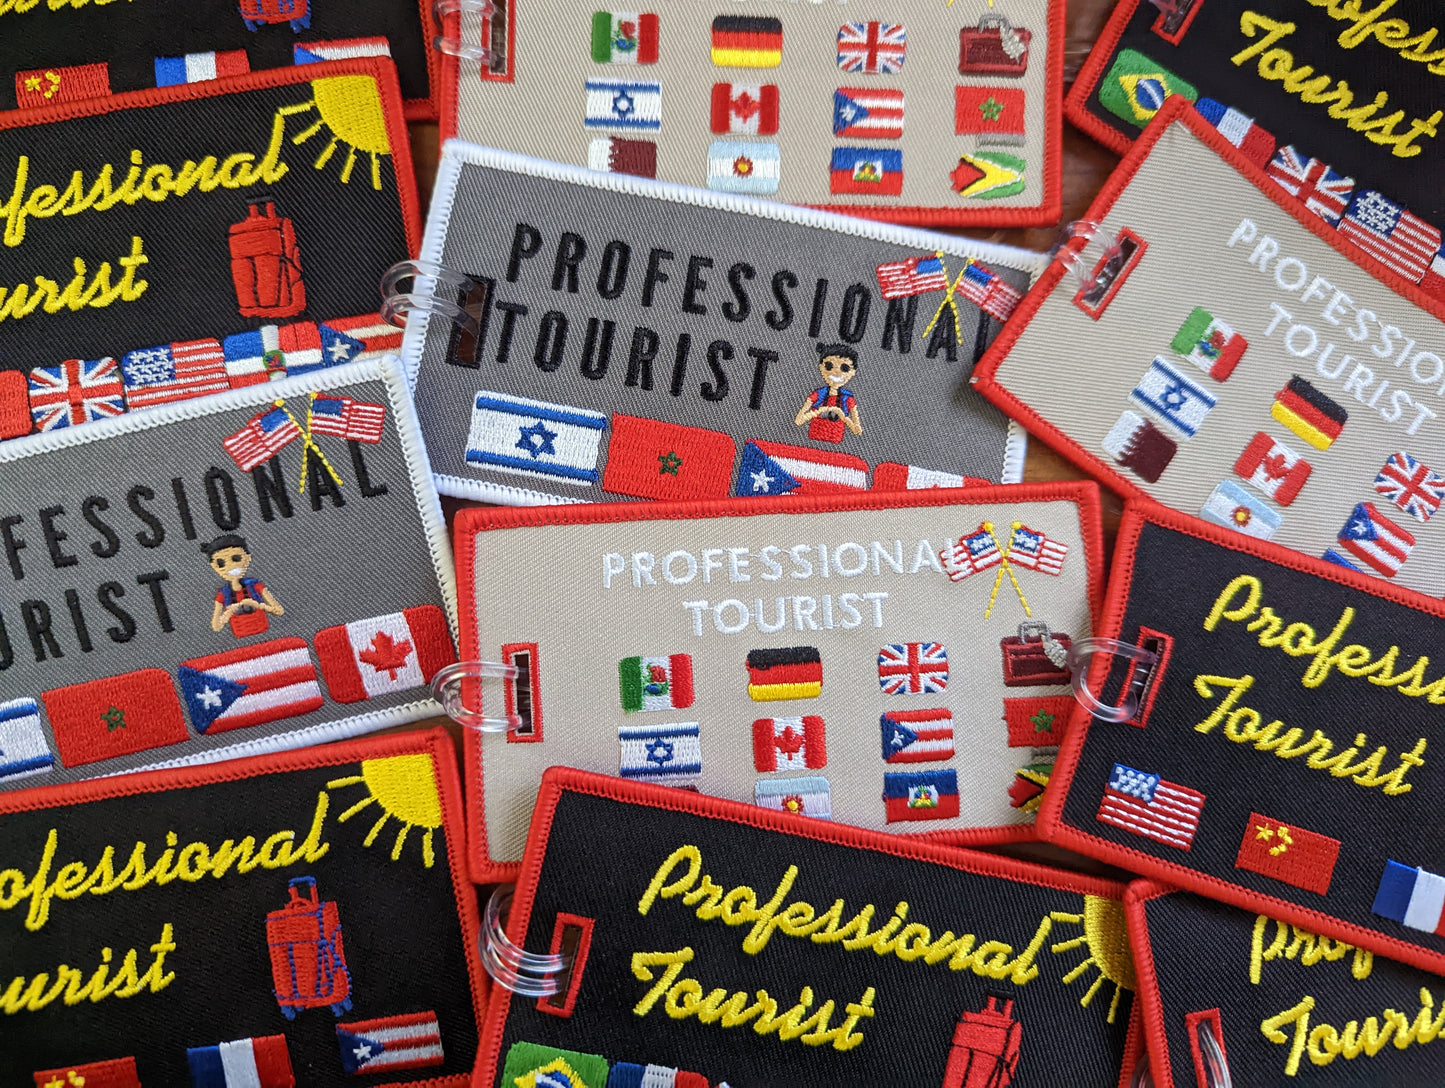 PROFESSIONAL TOURIST Luggage Tag. Worldwide! Light Gray background